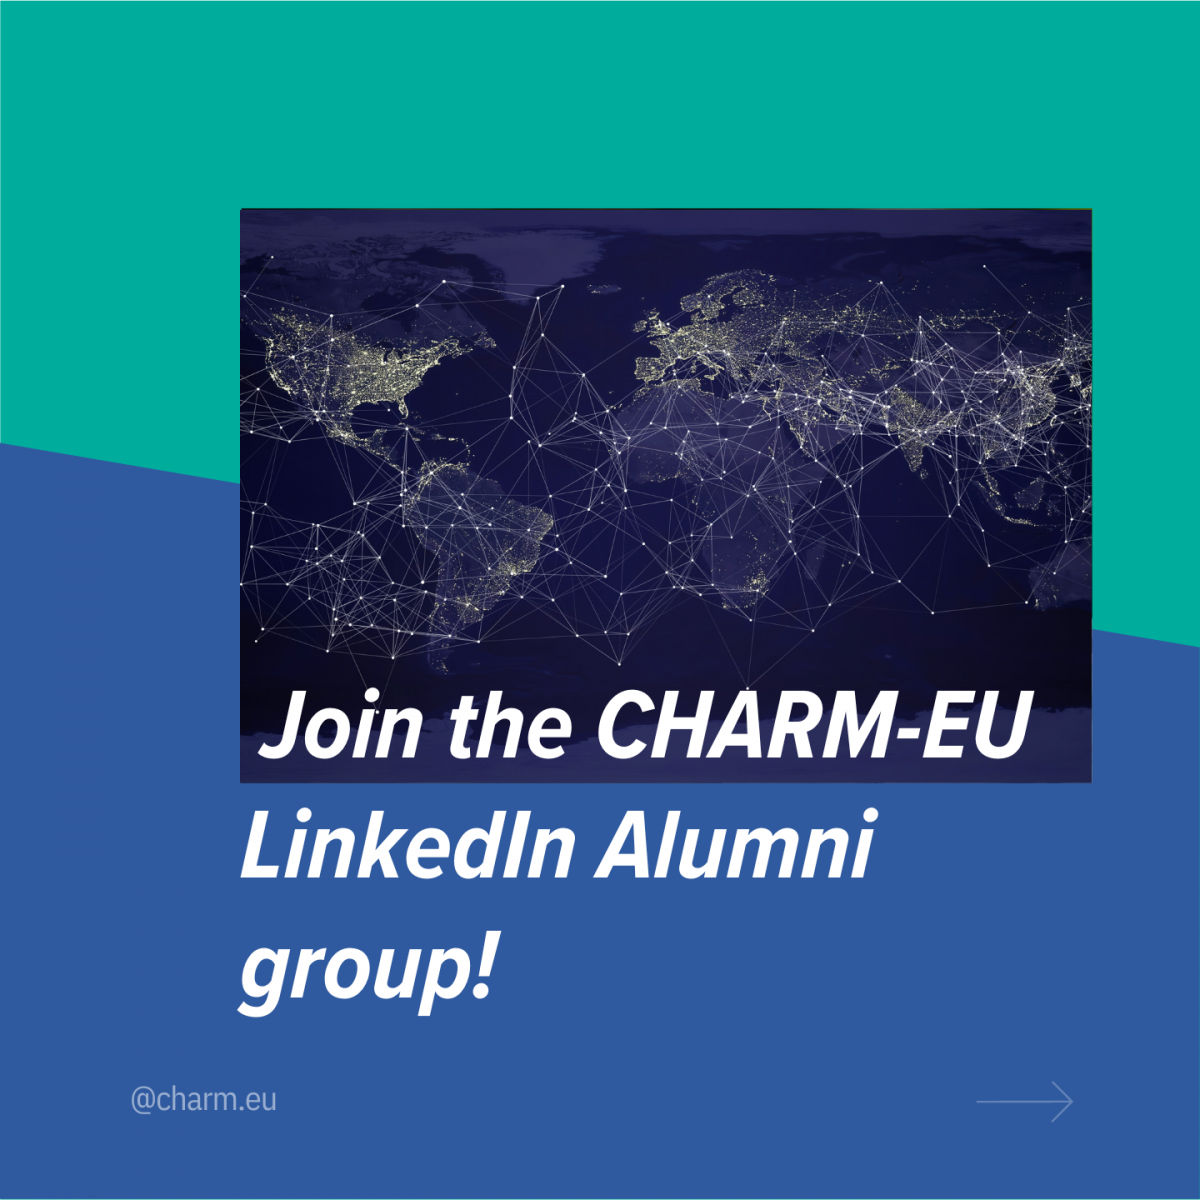 Join the CHARM-EU LinkedIn Alumni group!